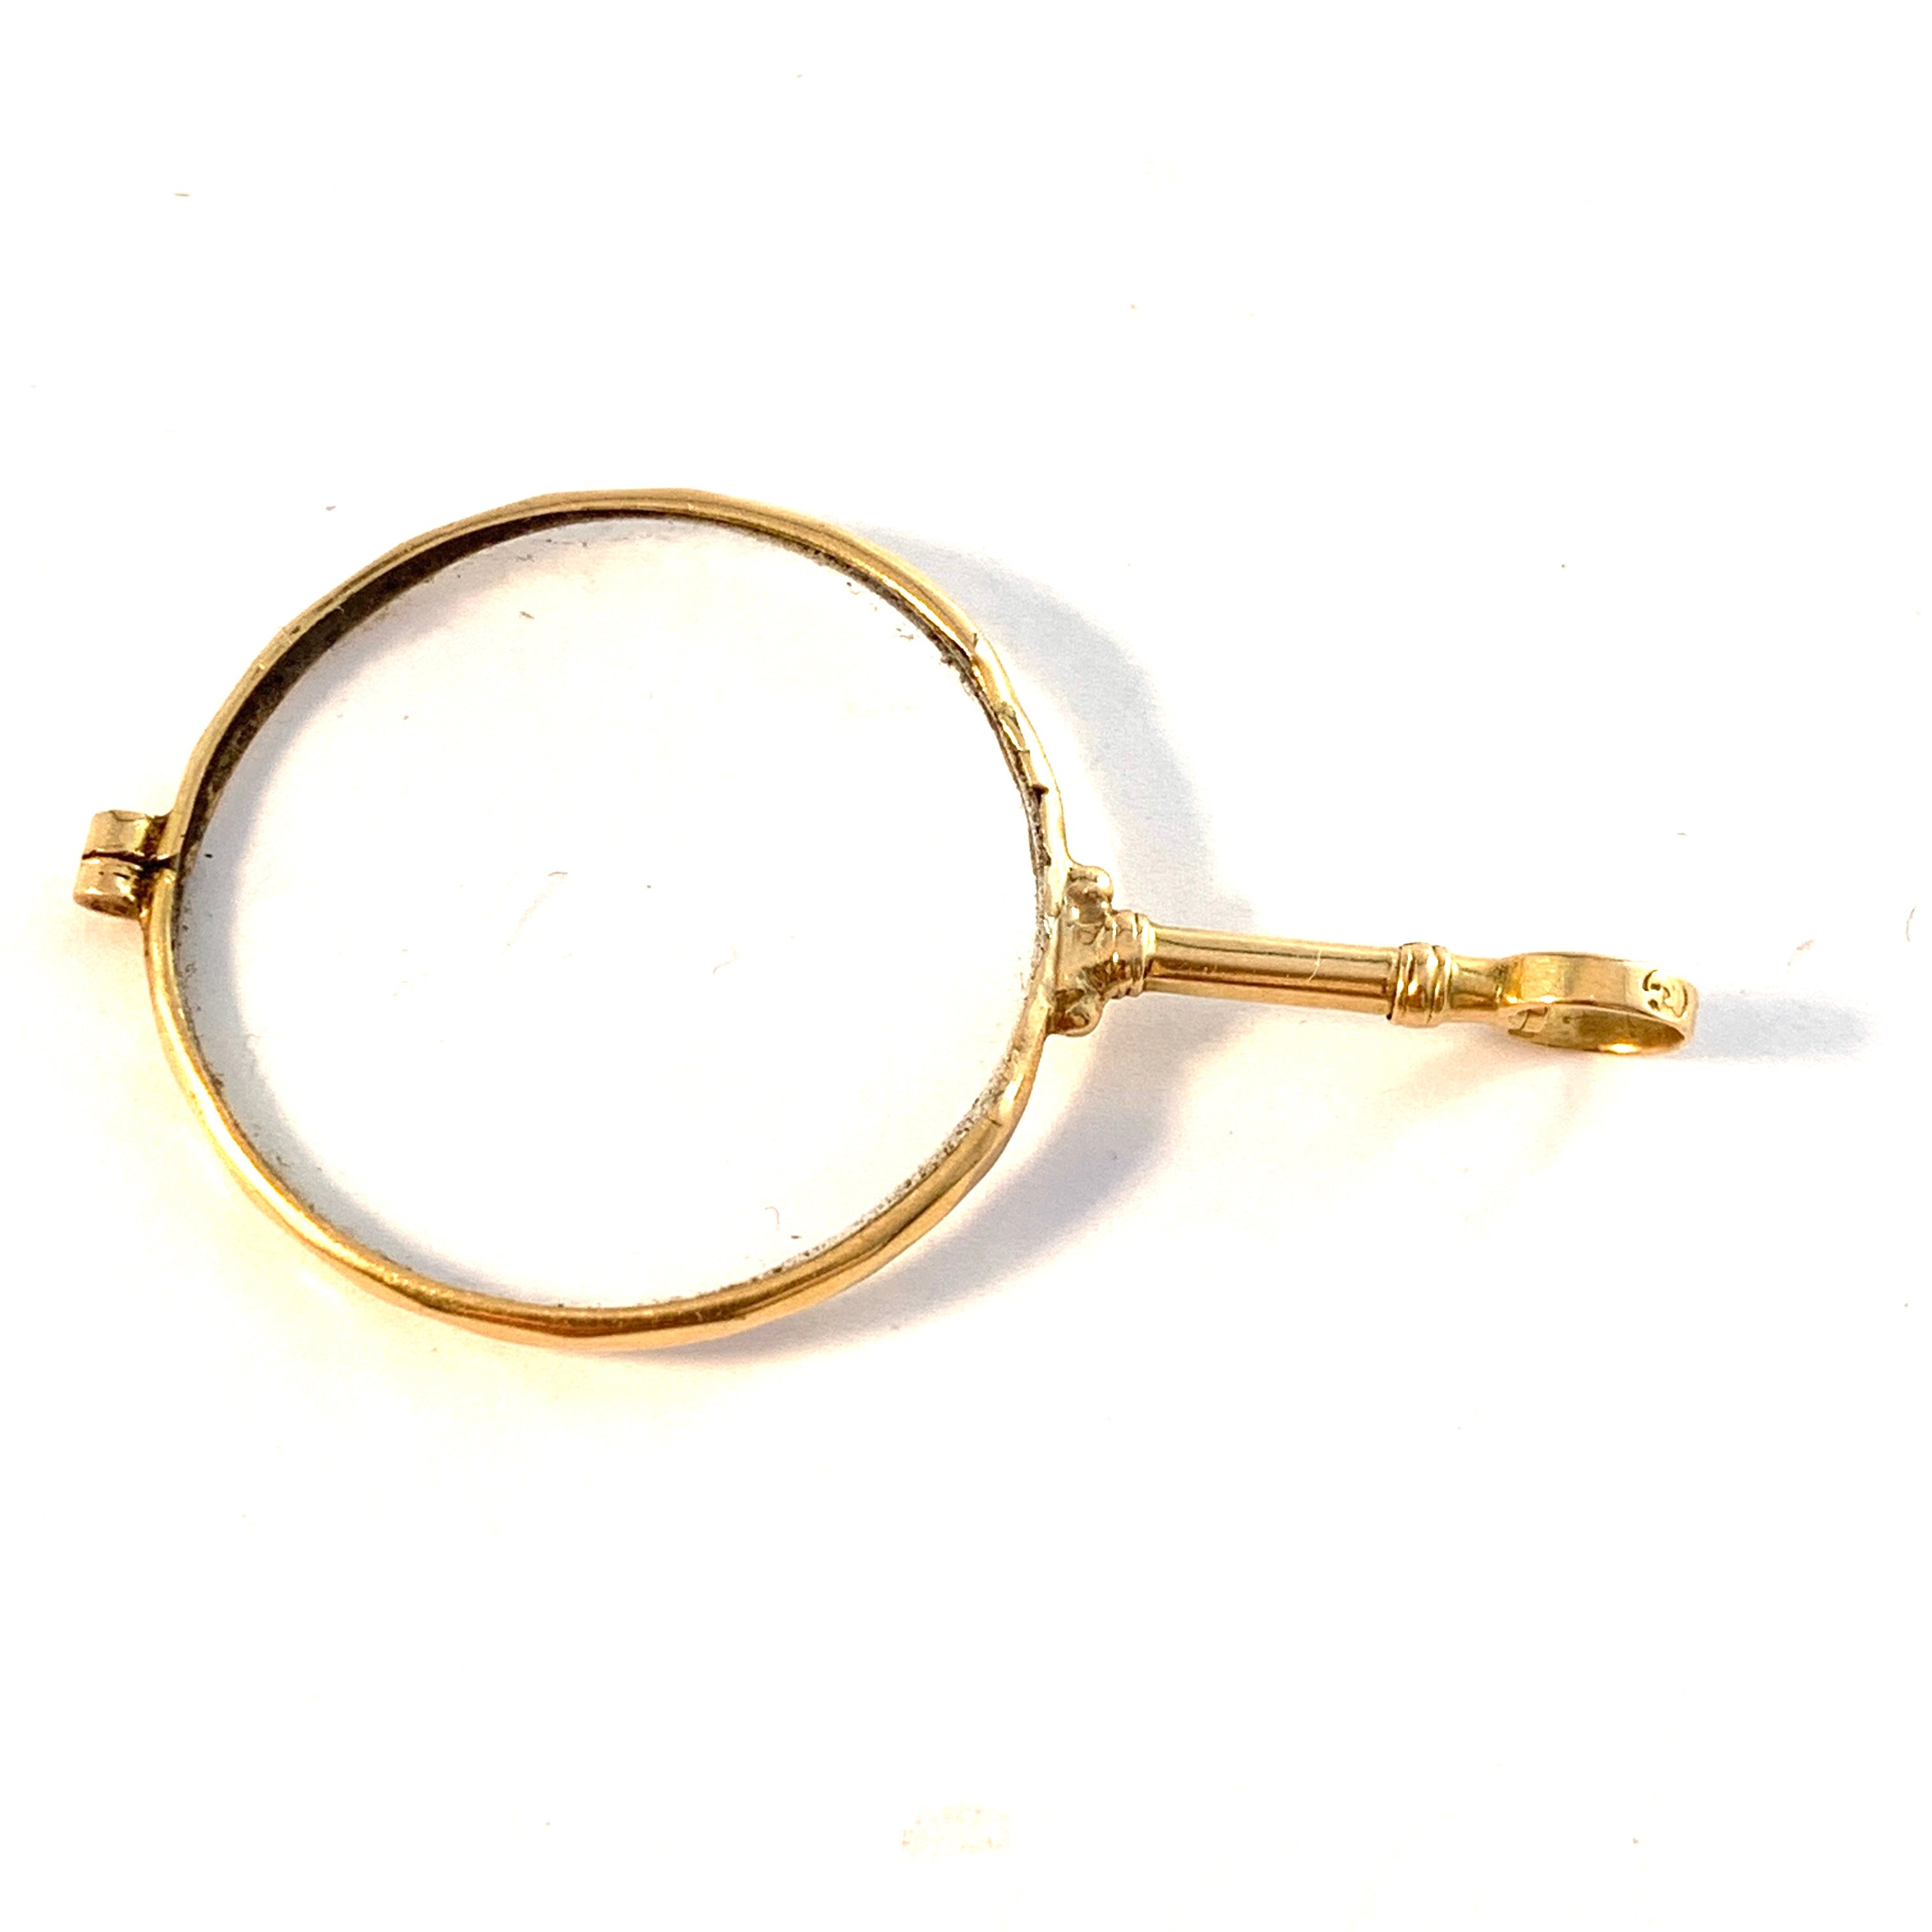 Gothenburg, Sweden mid 1800s. Antique 18k Gold Monocle Eye Glass Pendant